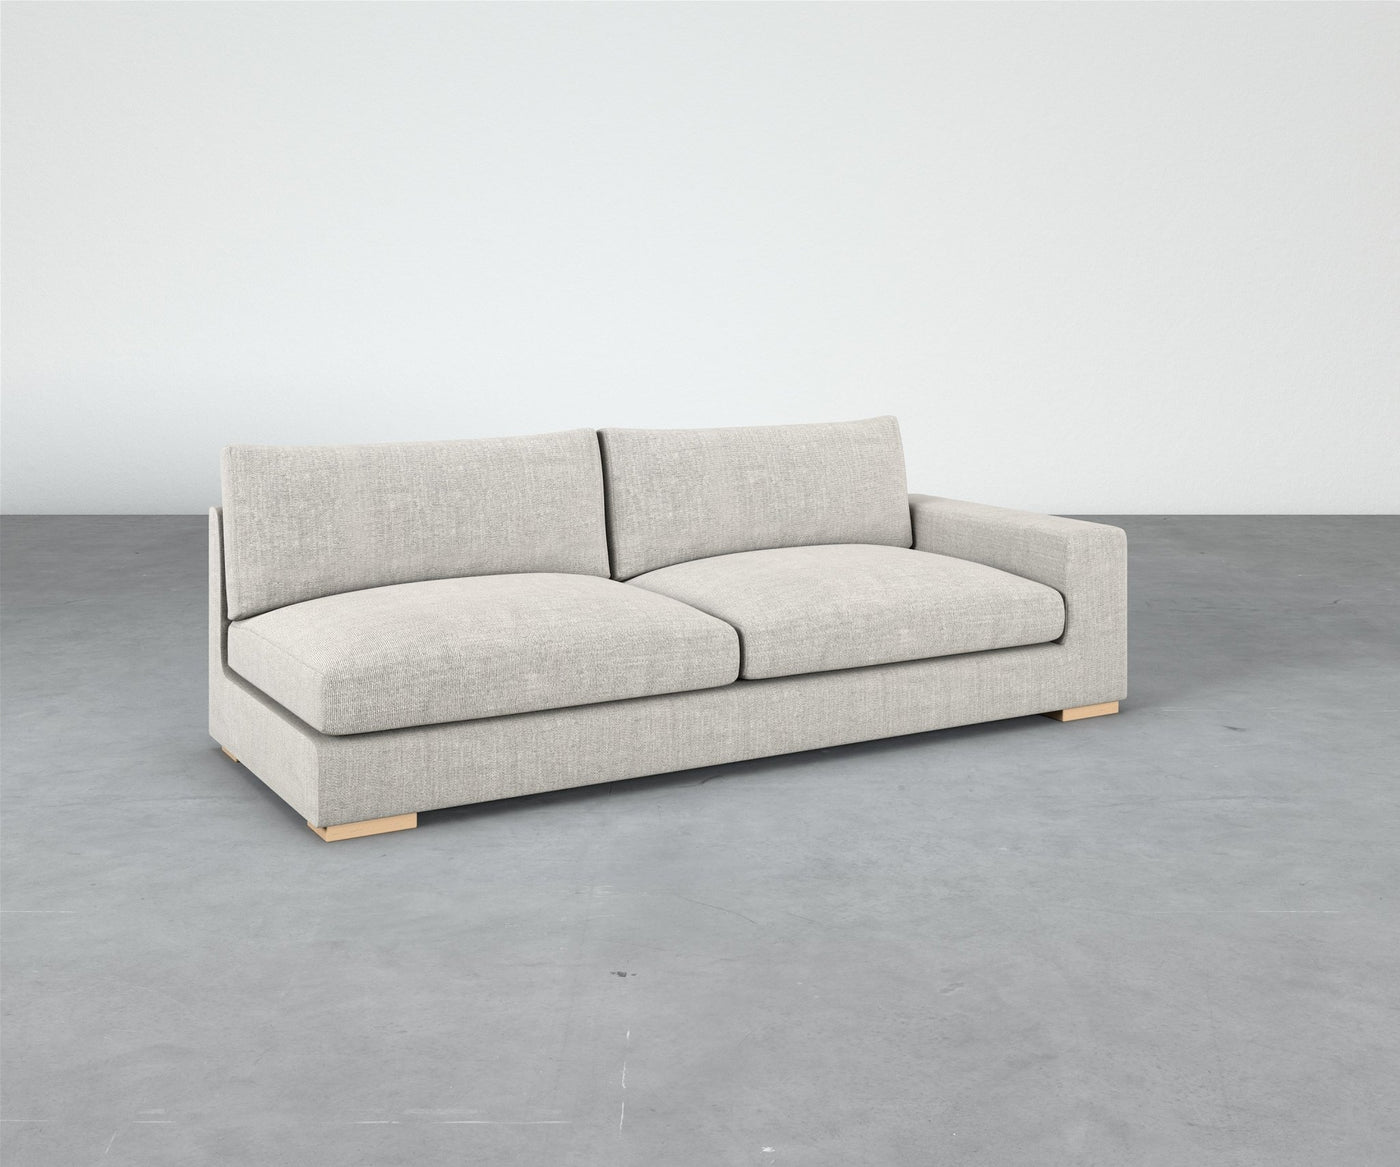 Manyana One-Arm Sofa - Modular Component